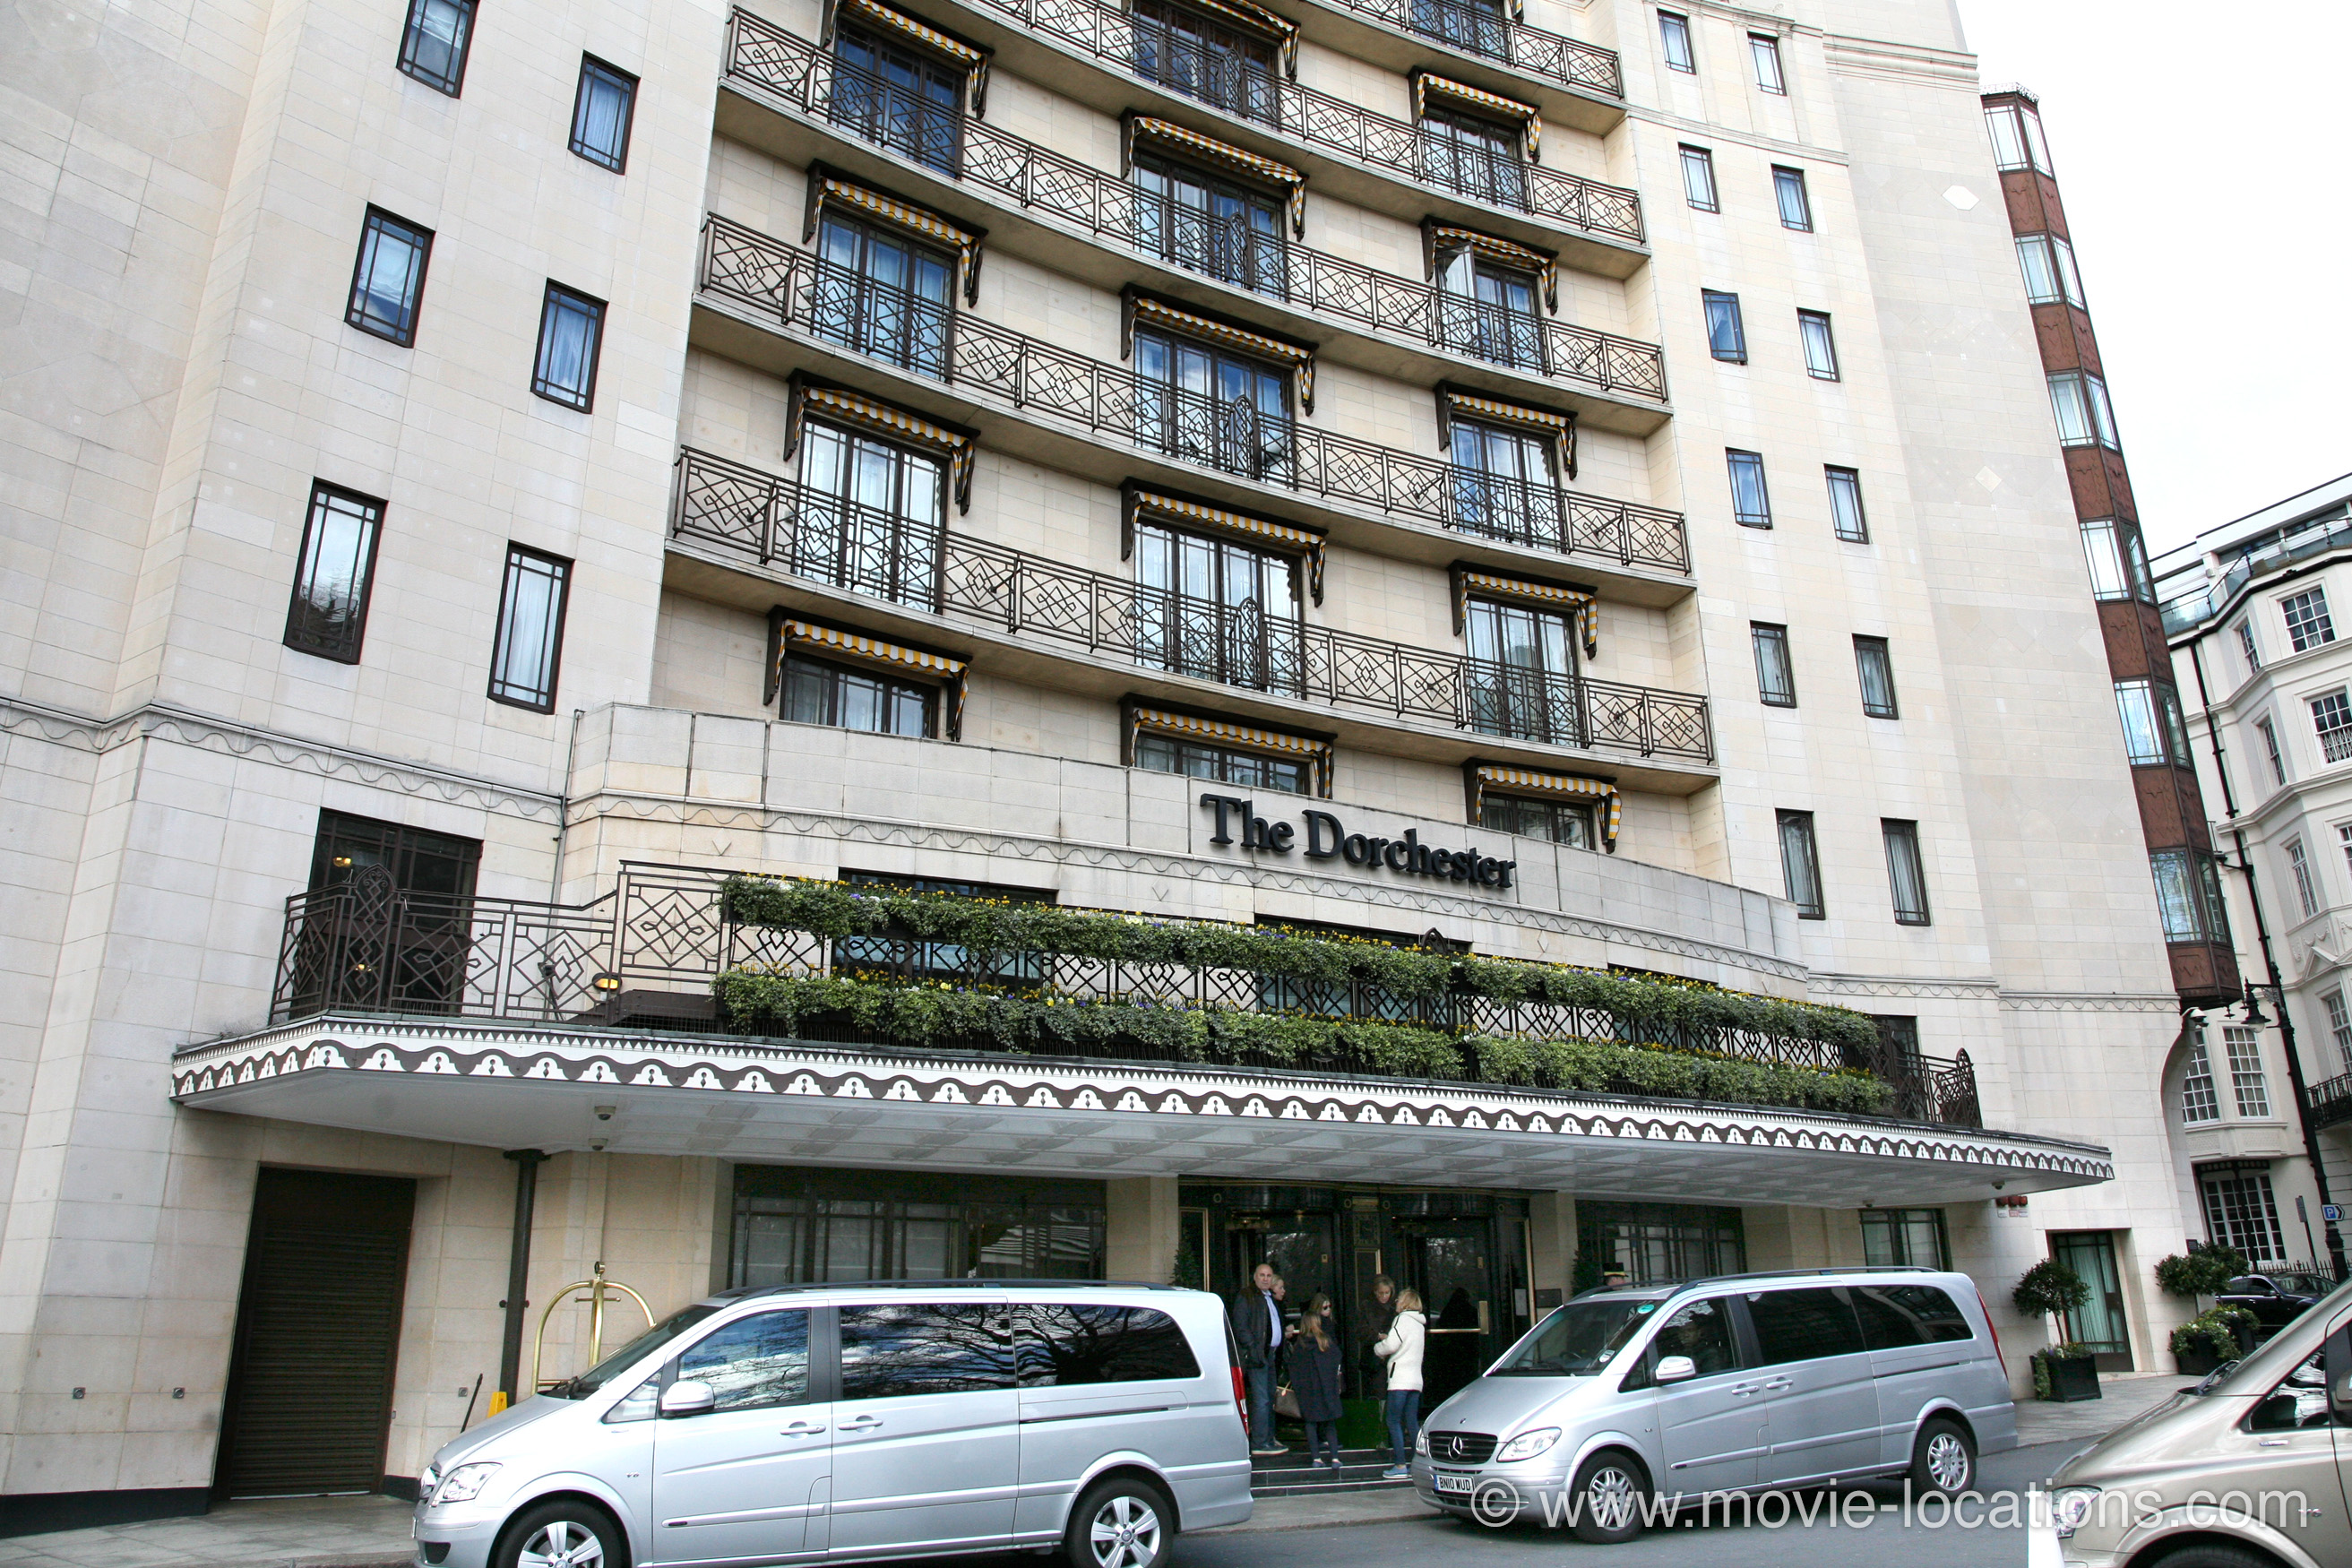 Morgan A Suitable Case For Treatment filming location: Dorchester Hotel, Park Lane, Mayfair, London W1